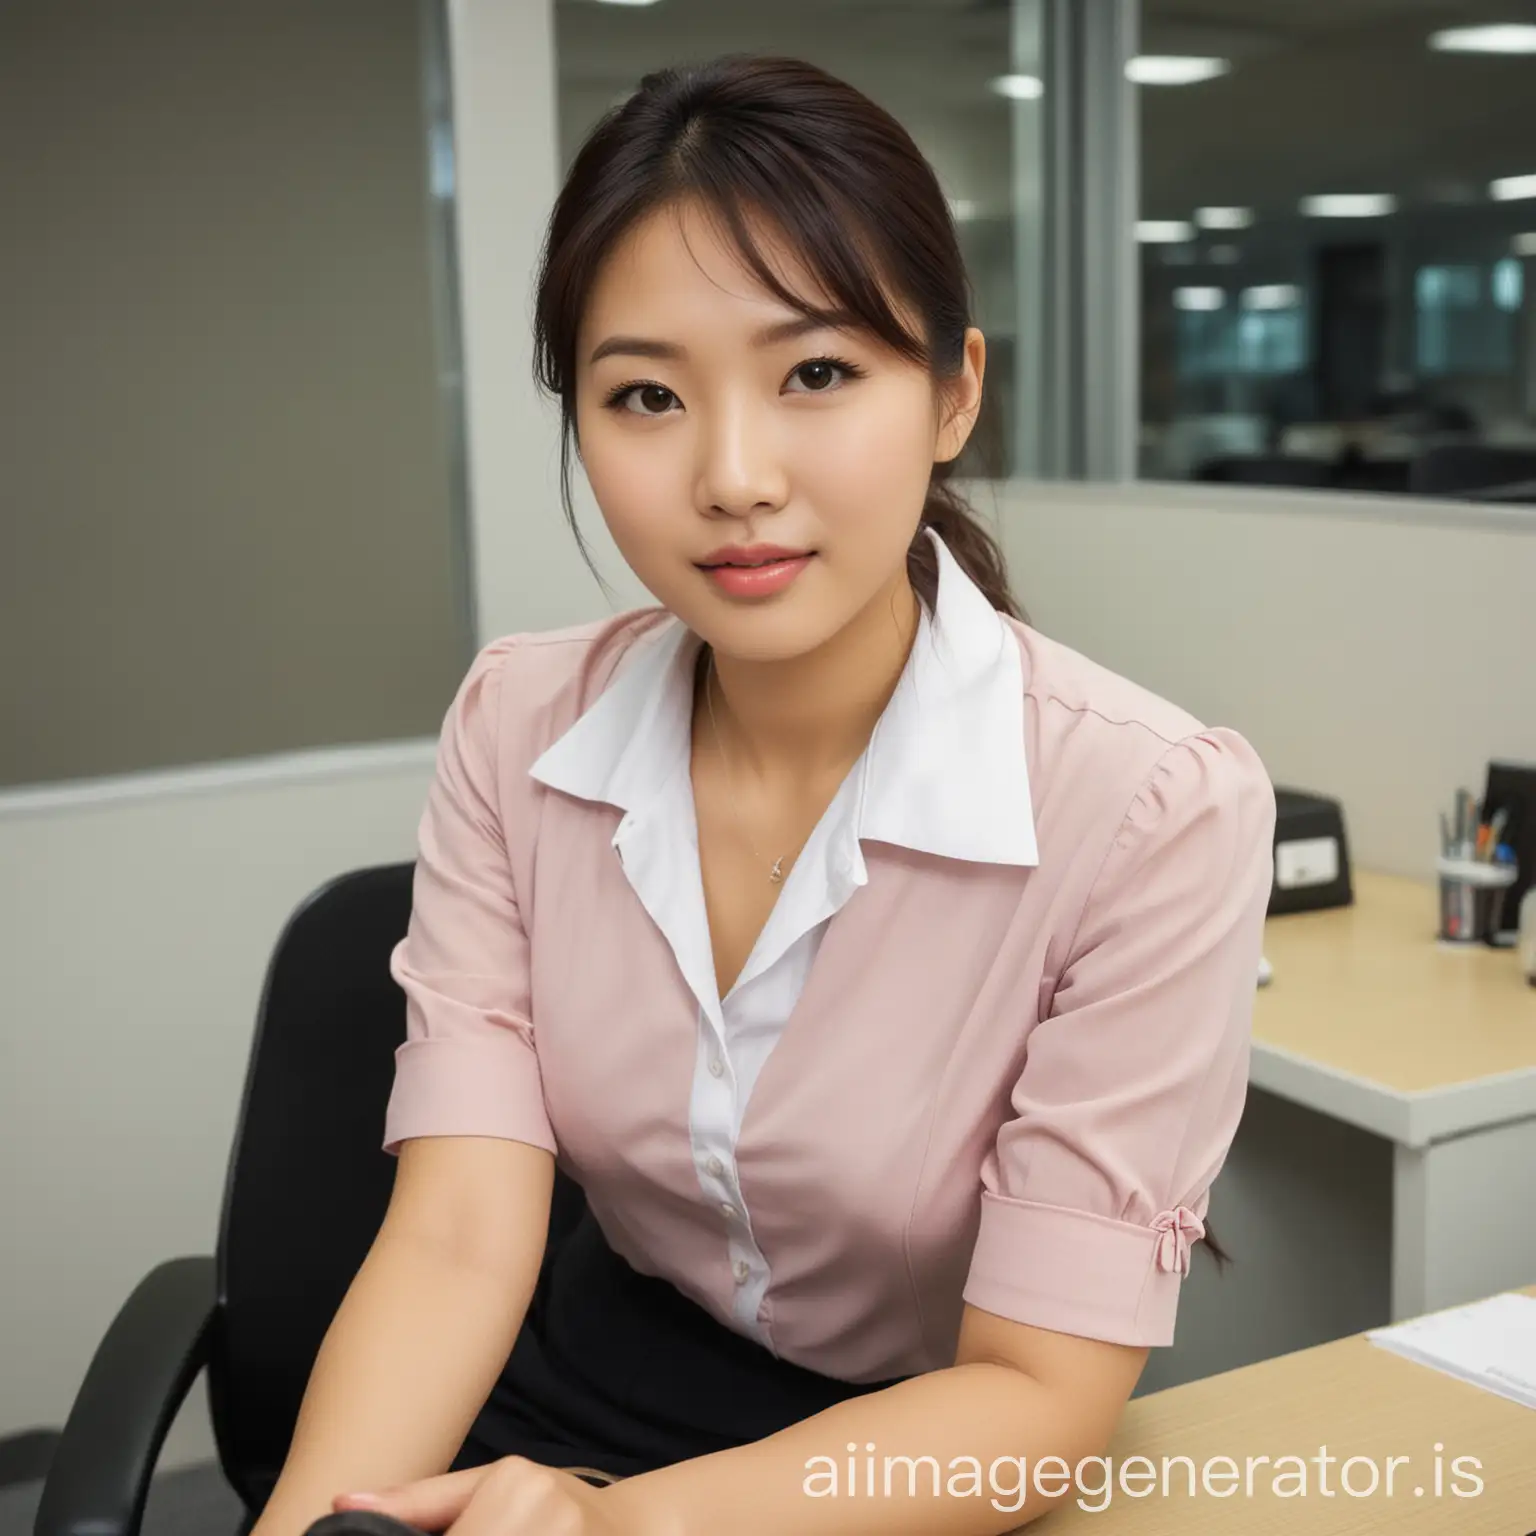 Stylish-Asian-Office-Woman-Working-in-Modern-Workspace